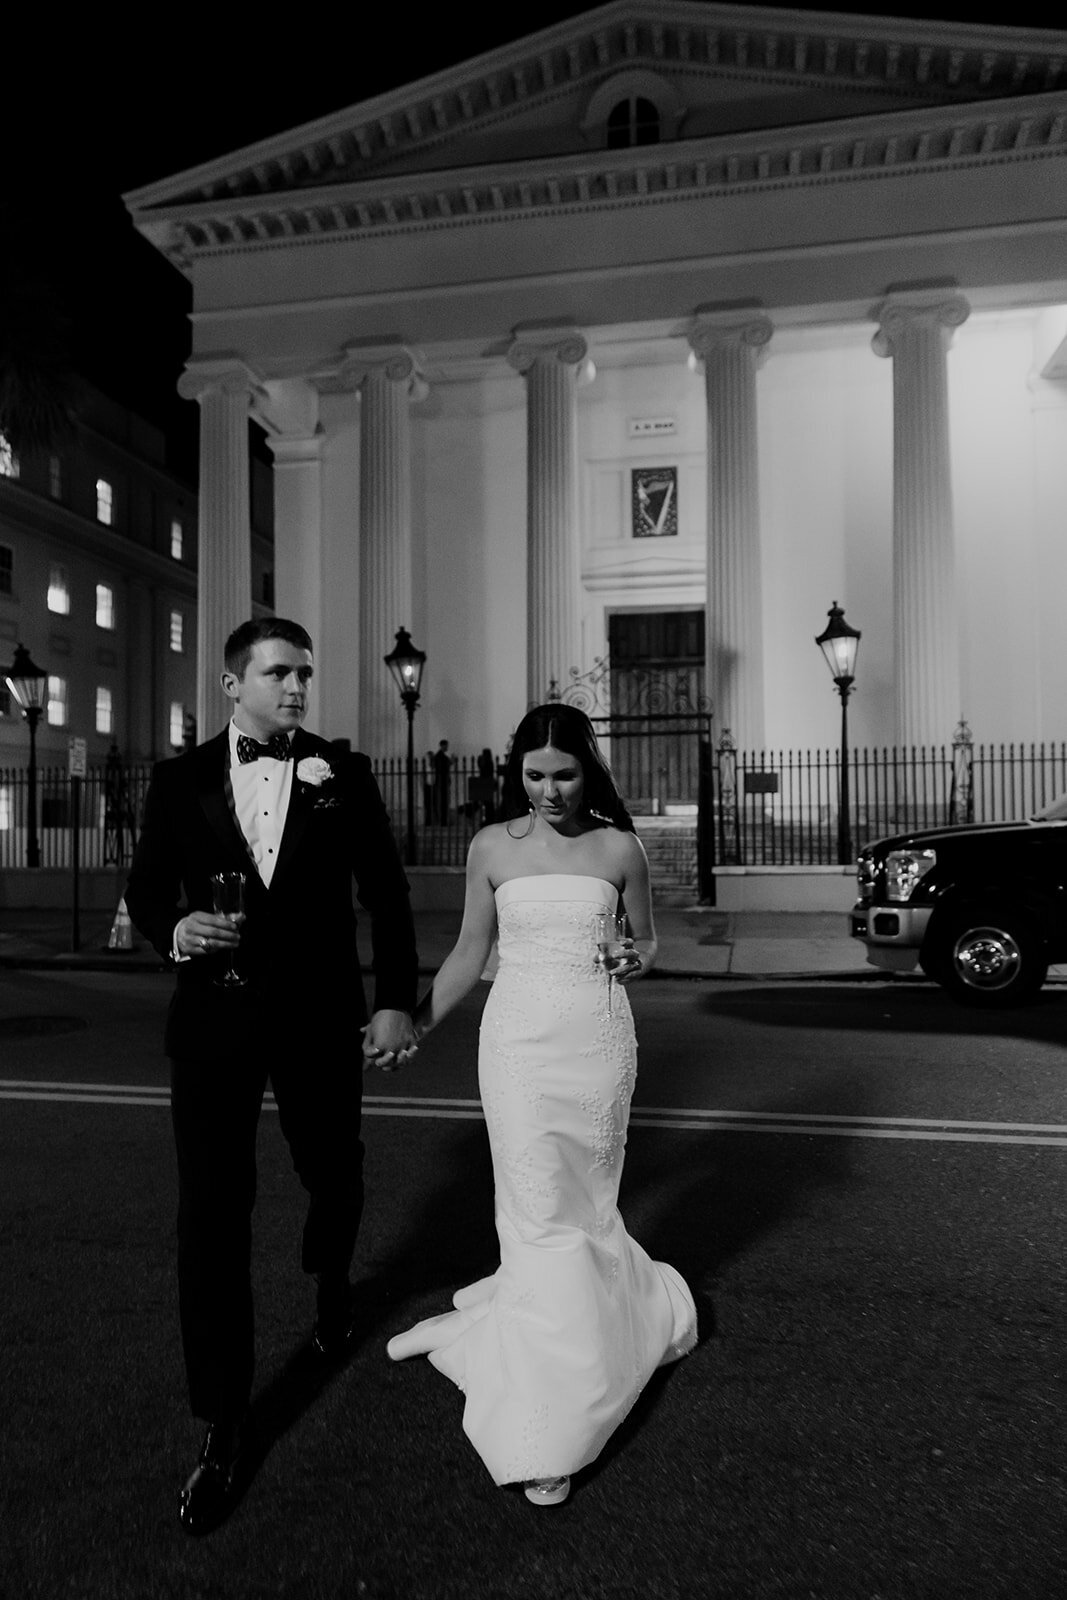 Charleston ewdding photographers photographed couple walking across street at night. Hibernian Hall Charleston in background